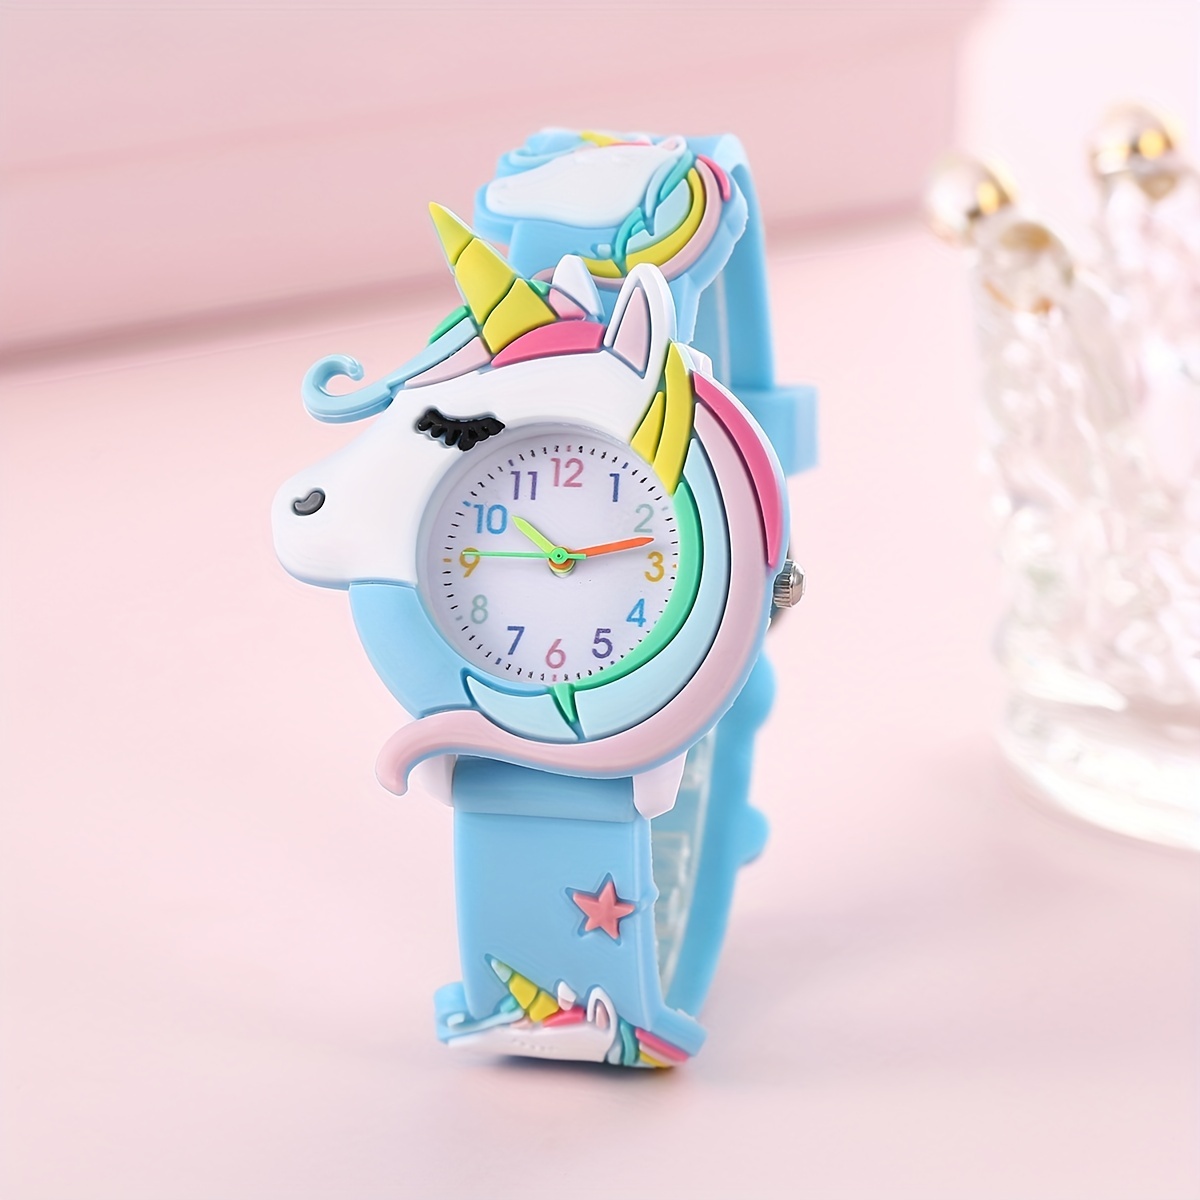  Awatty Reloj inteligente para niños, regalo para niñas de 4 a 8  años, cámara, video, música, 14 juegos, calculadora de alarma, cumpleaños  para niñas, reloj de juguetes para niñas de 3